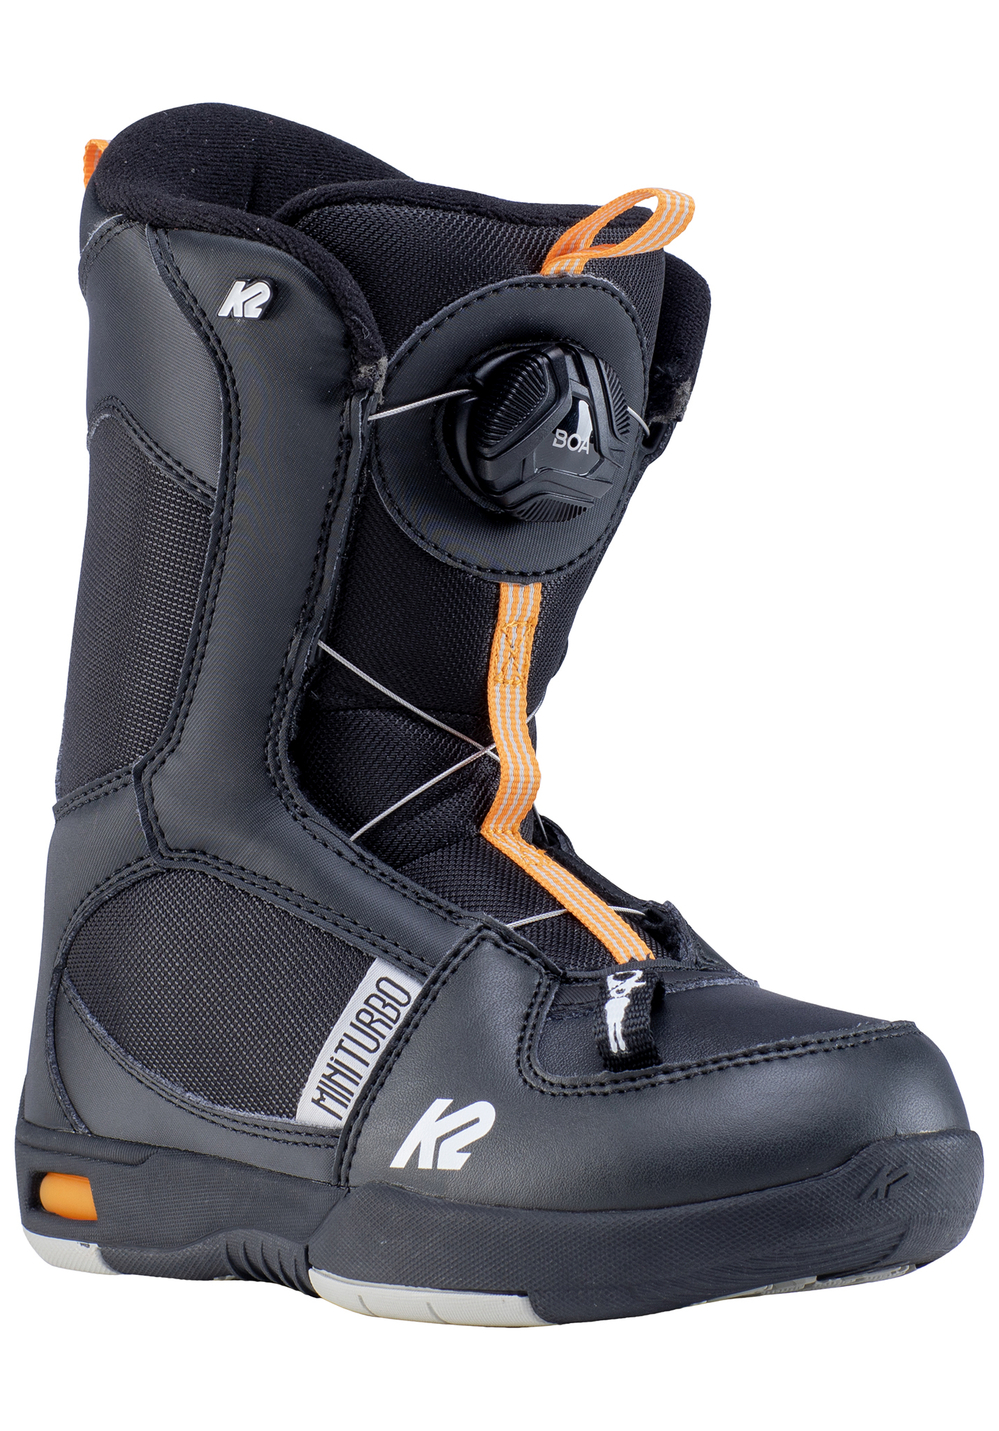 36 37 Kinder Boots Country JR Gr CC Crazy Creek Snowboard Schuhe 38 